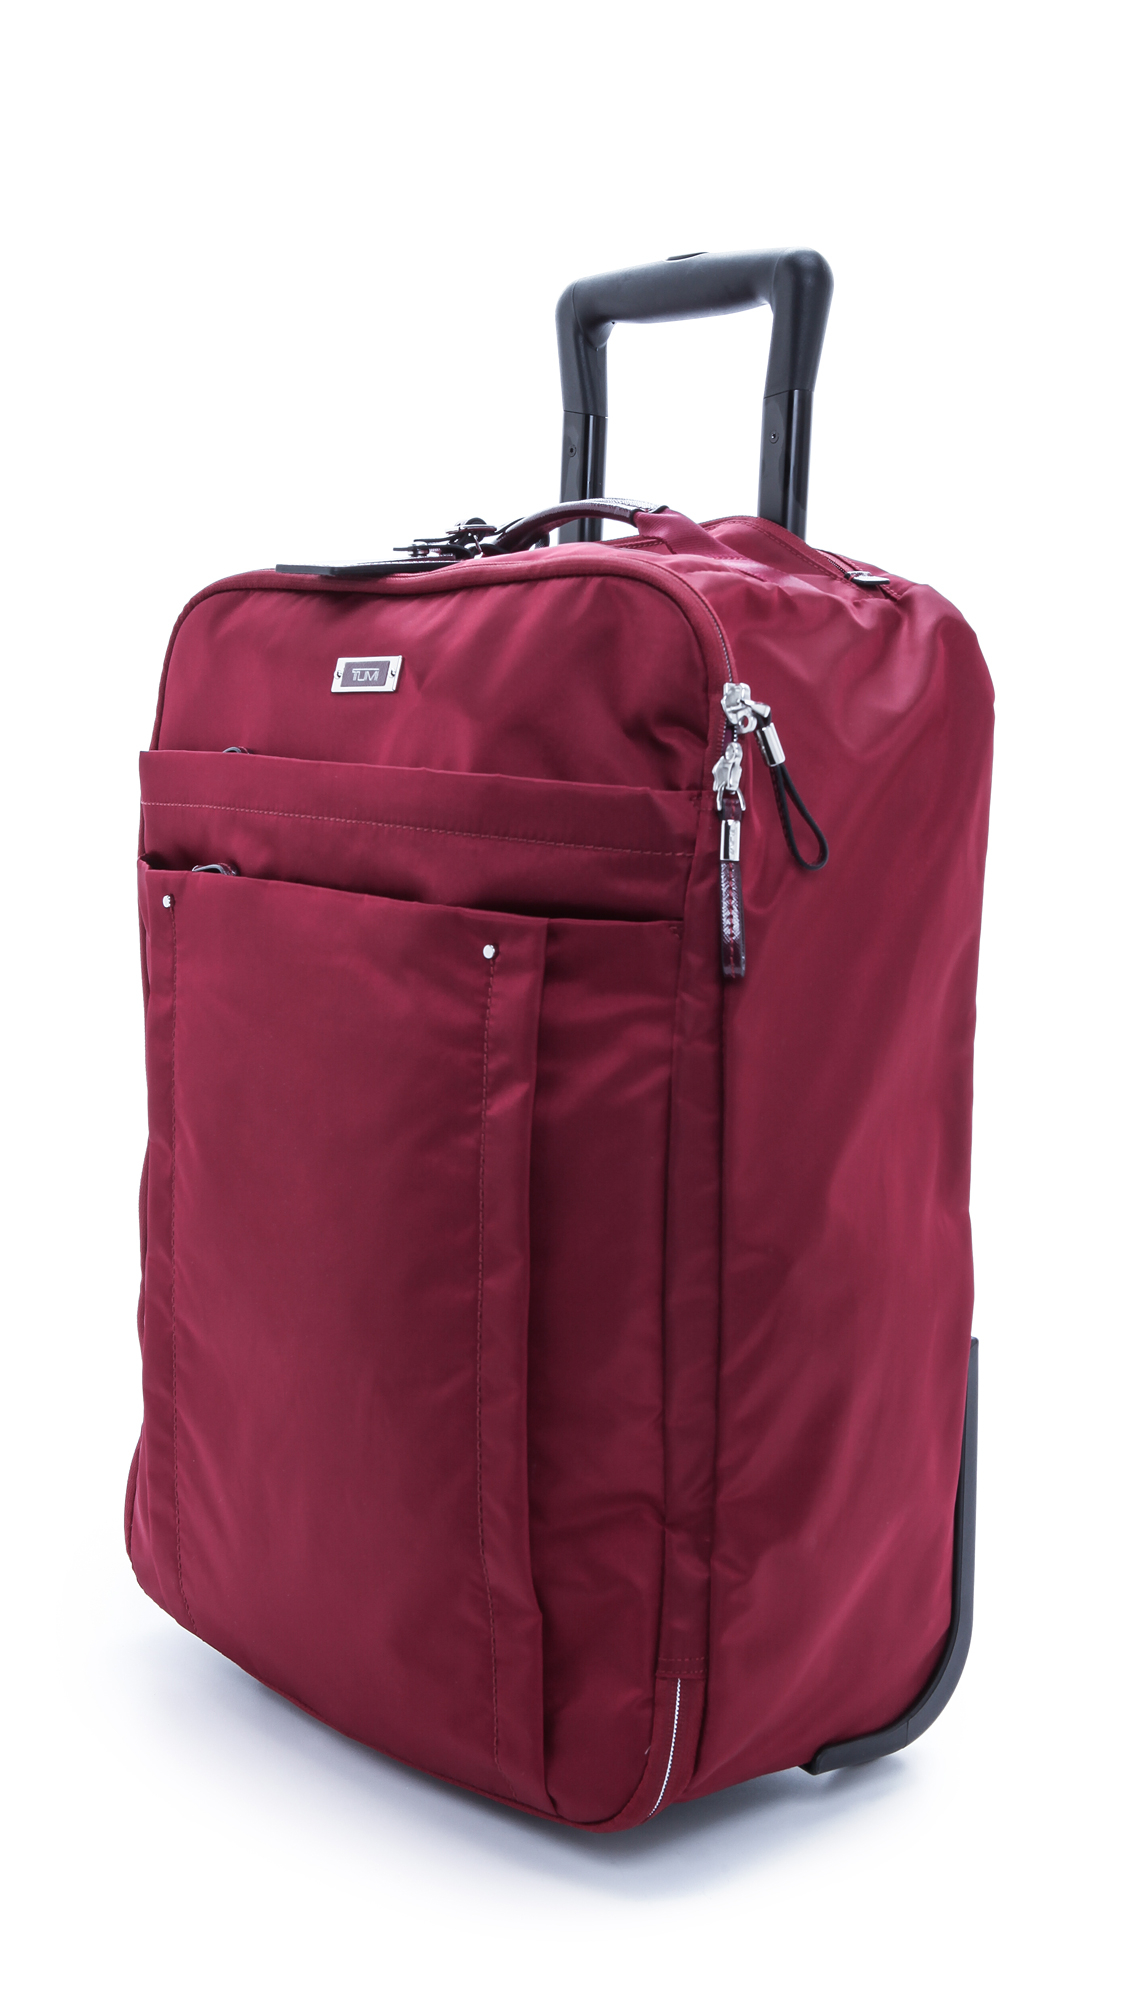 Lyst - Tumi Super Leger International Carry On Luggage Garnet in Red